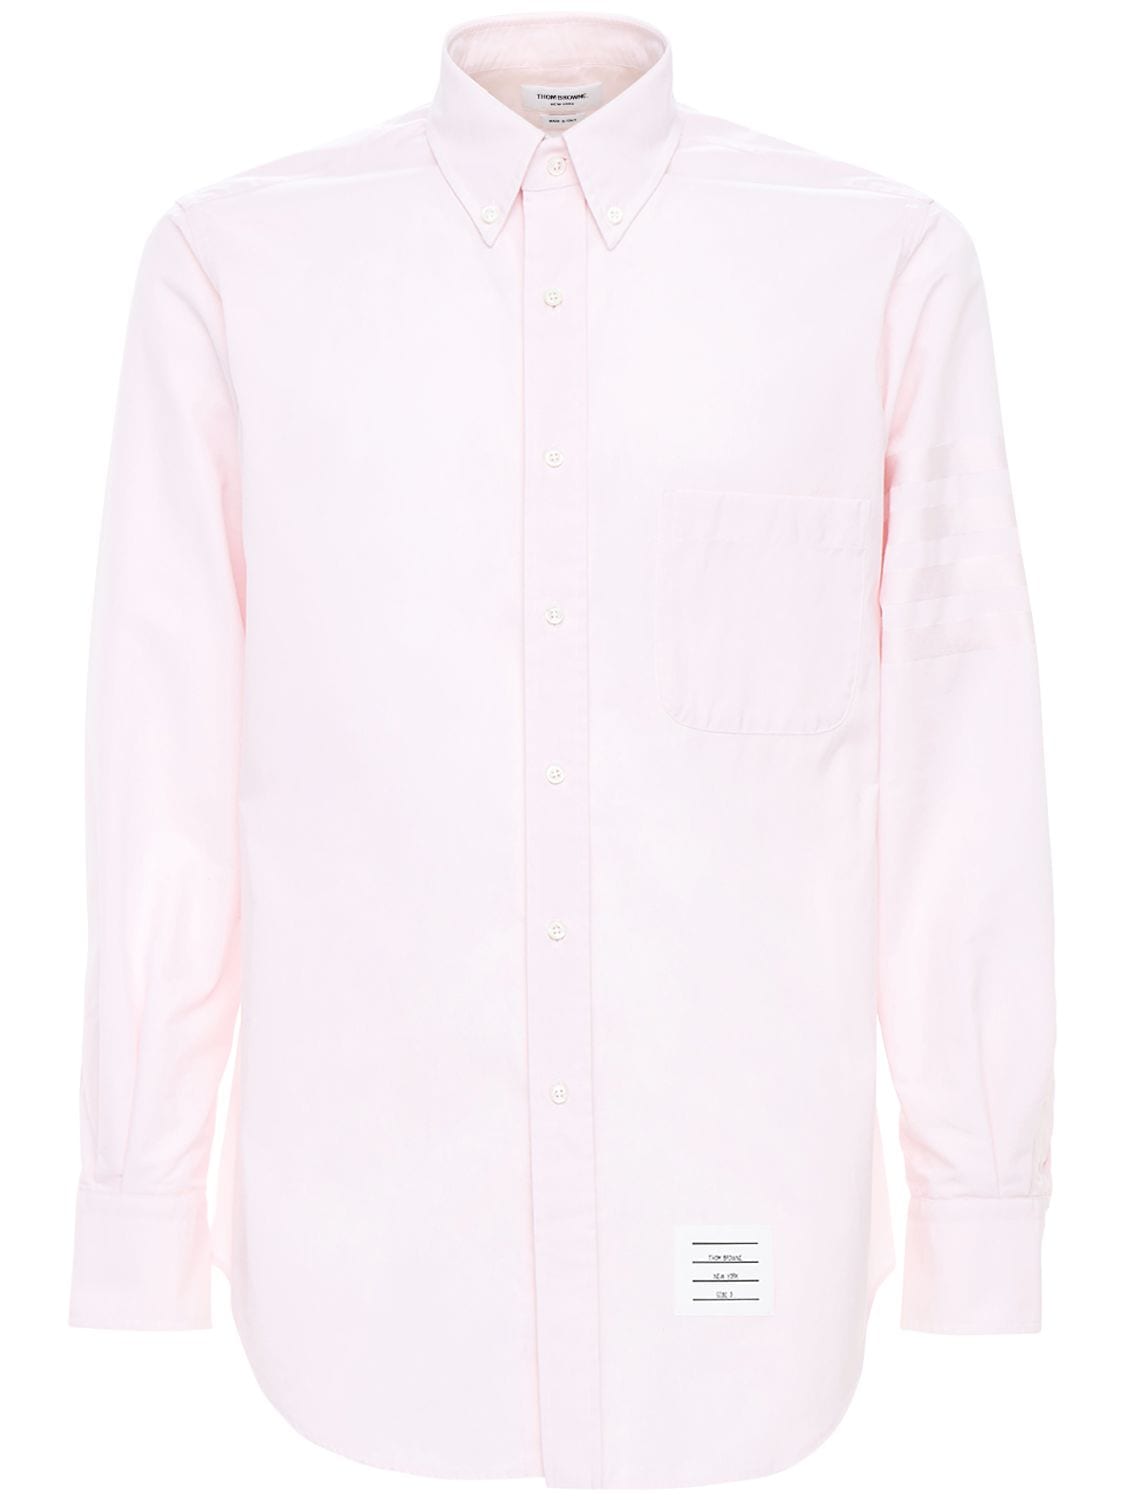 THOM BROWNE Cotton Oxford Shirt W/ Satin 4 Bar